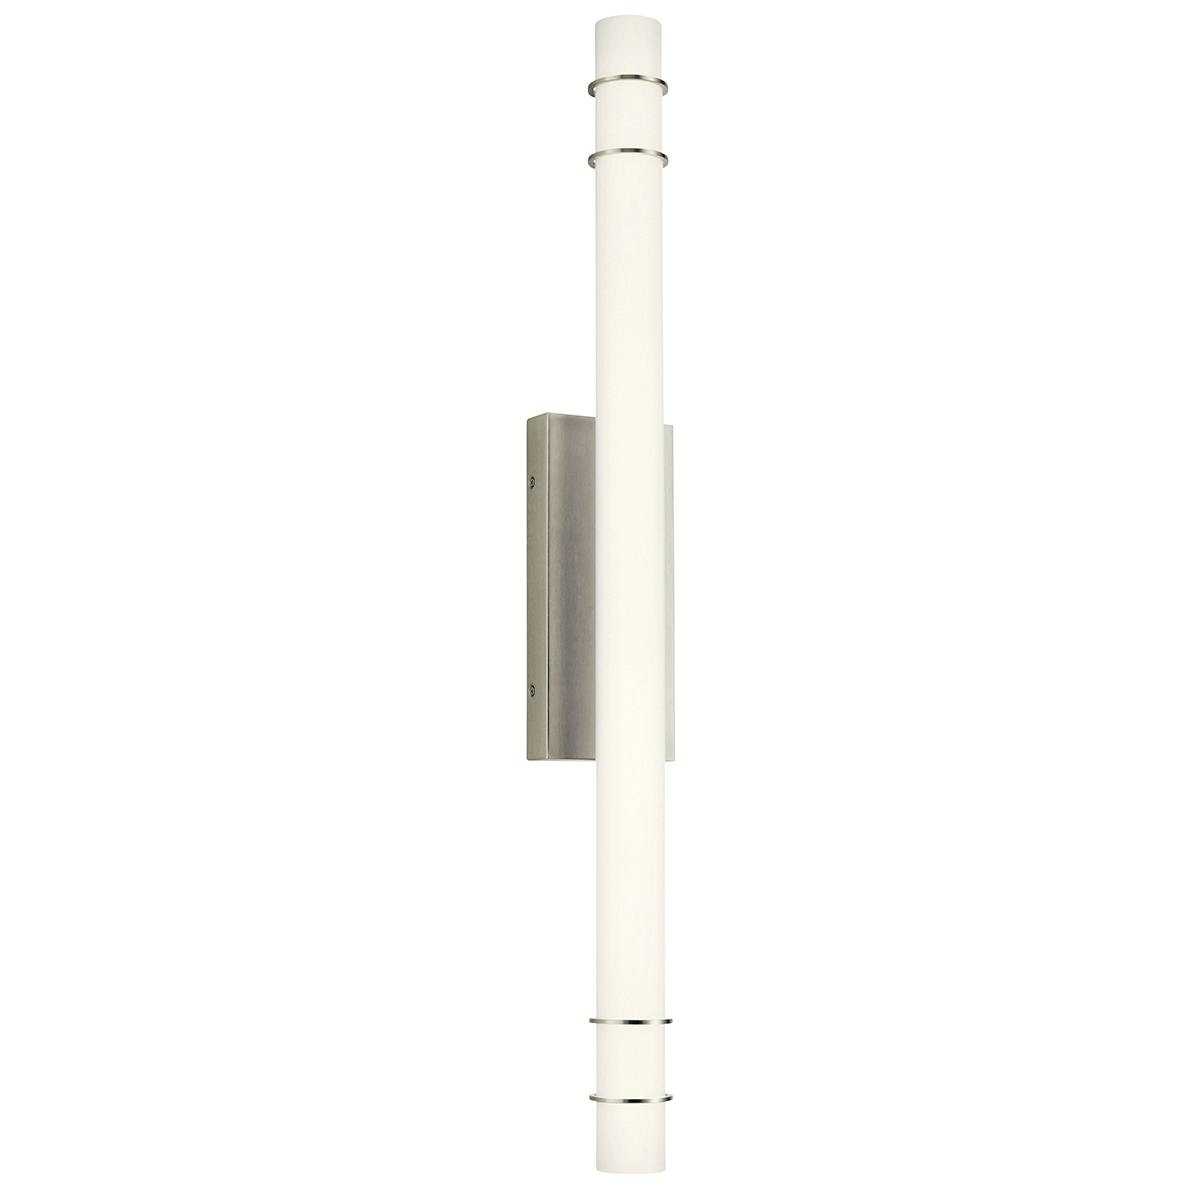 Korona 36" LED Linear Vanity Light Nickel on a white background